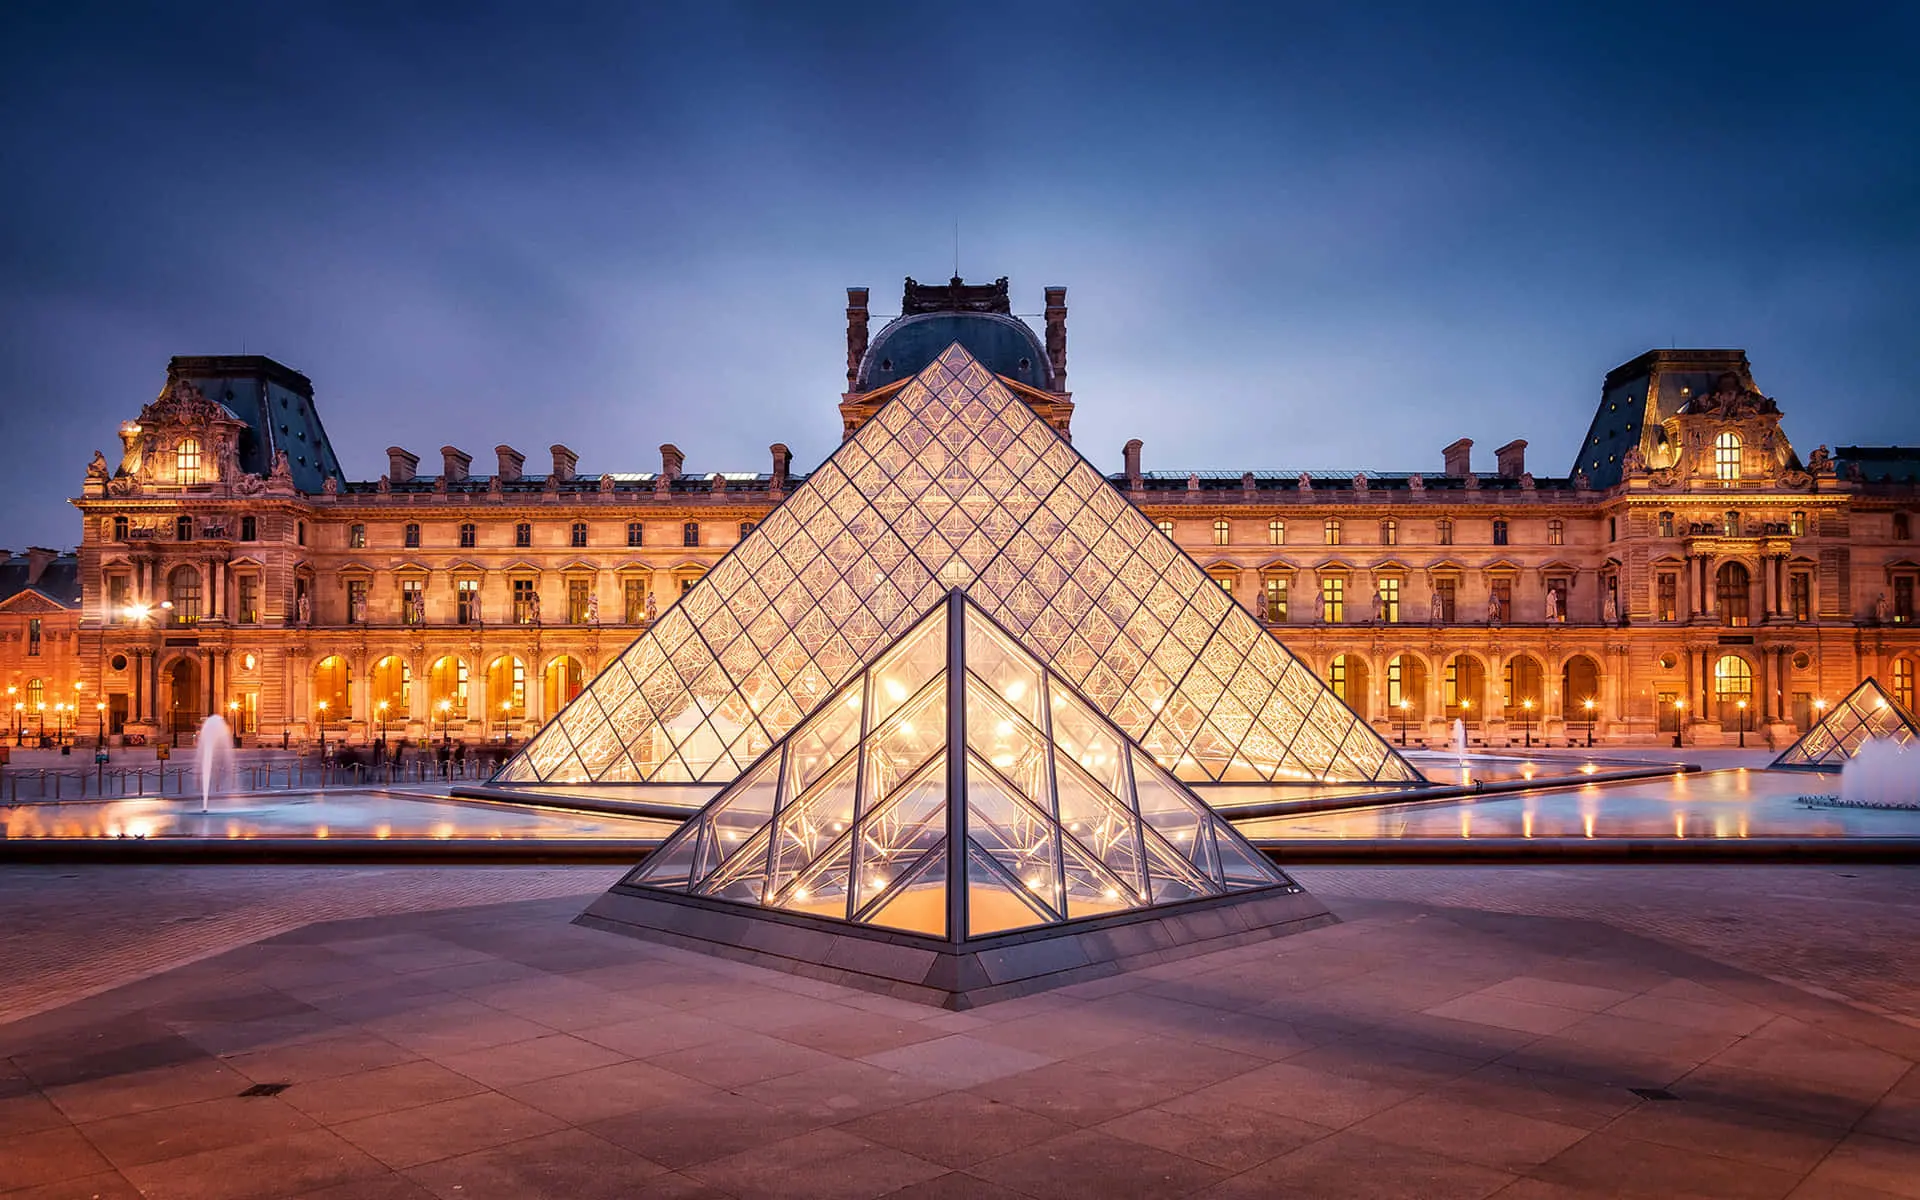 Descubra o Louvre Historia Obras e Curiosidades